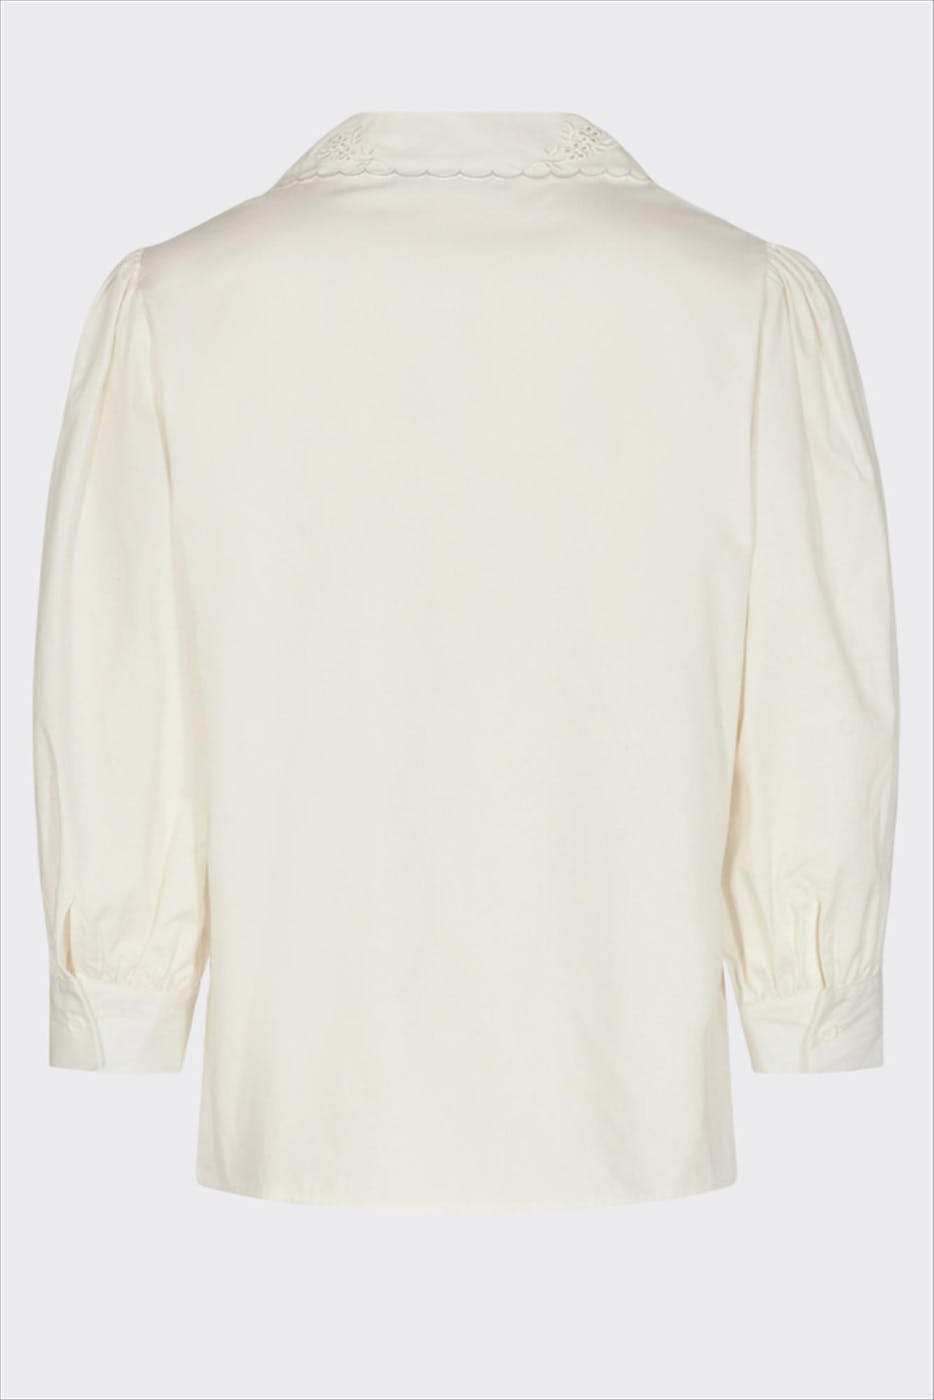 Minimum - Witte Betta blouse